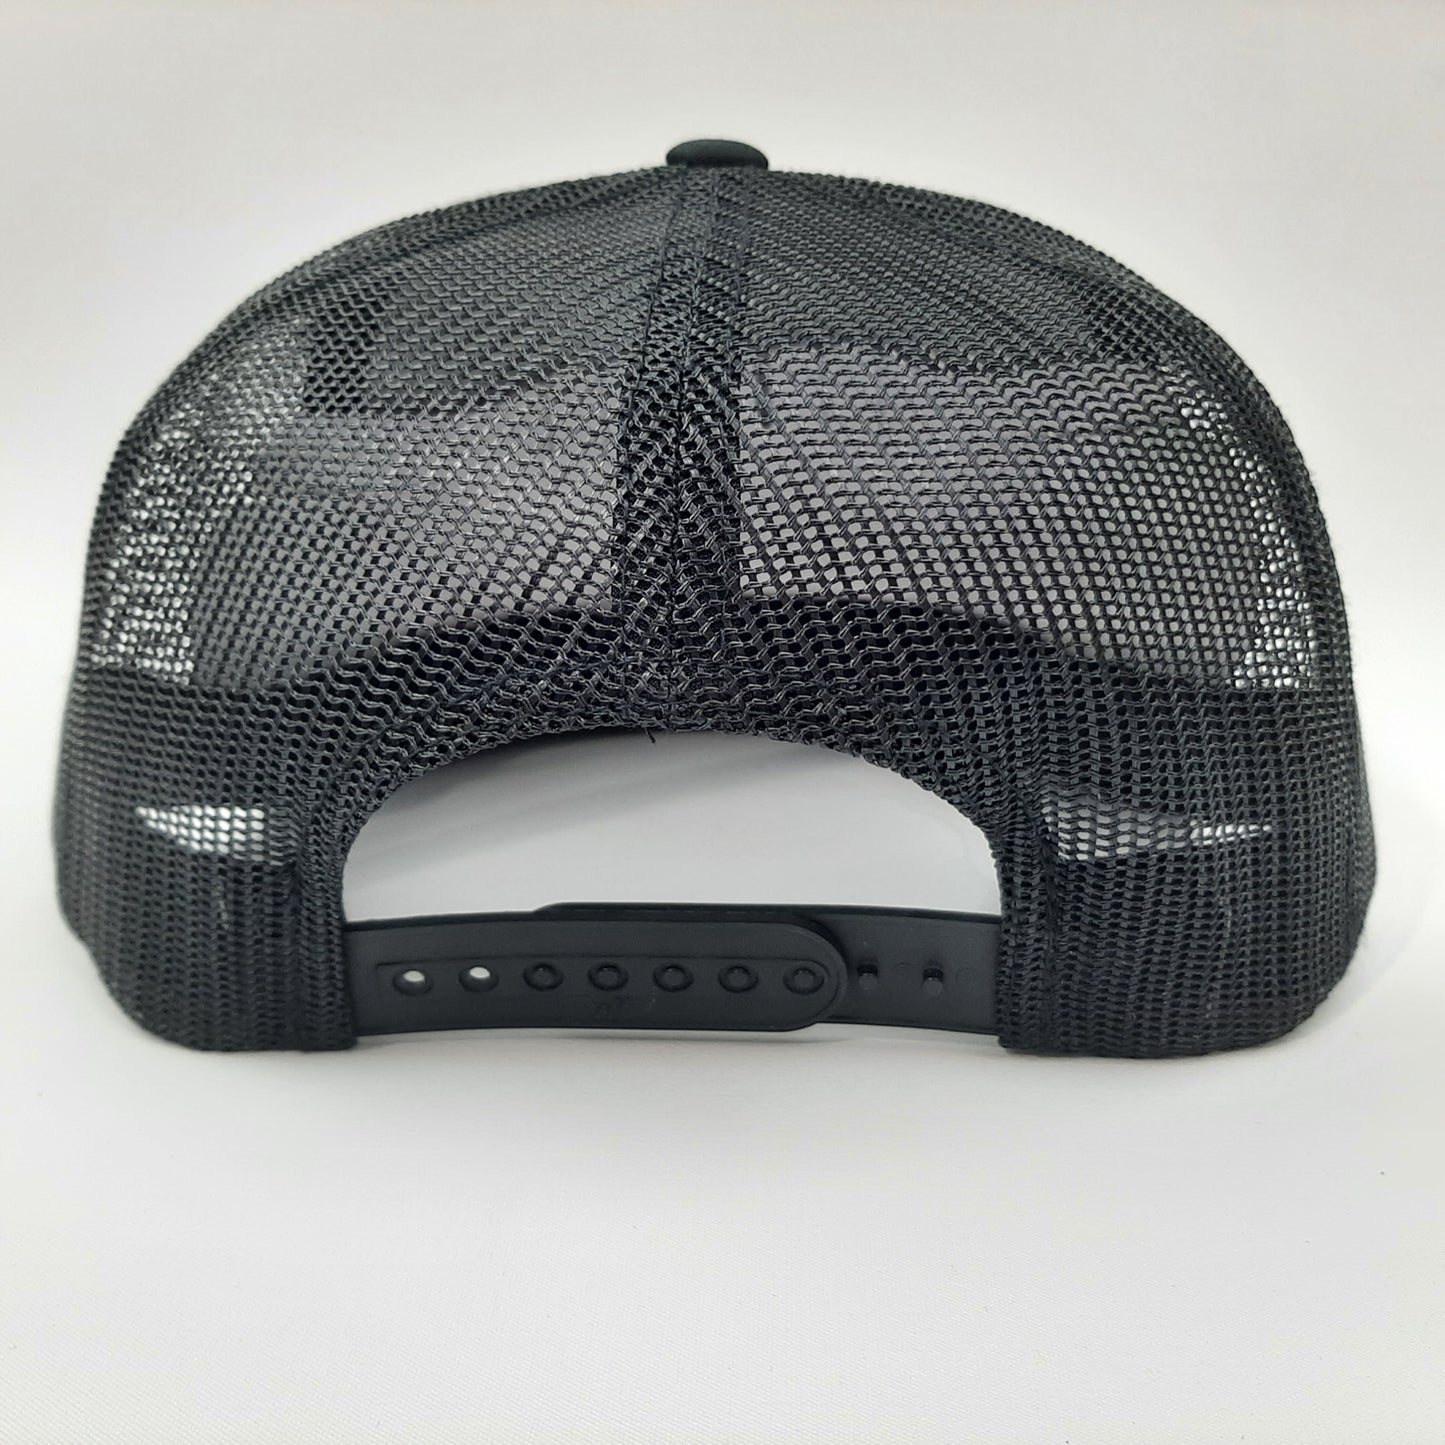 John Deere Embroidered Flat Bill Mesh Snapback Cap Hat Black Yupoong